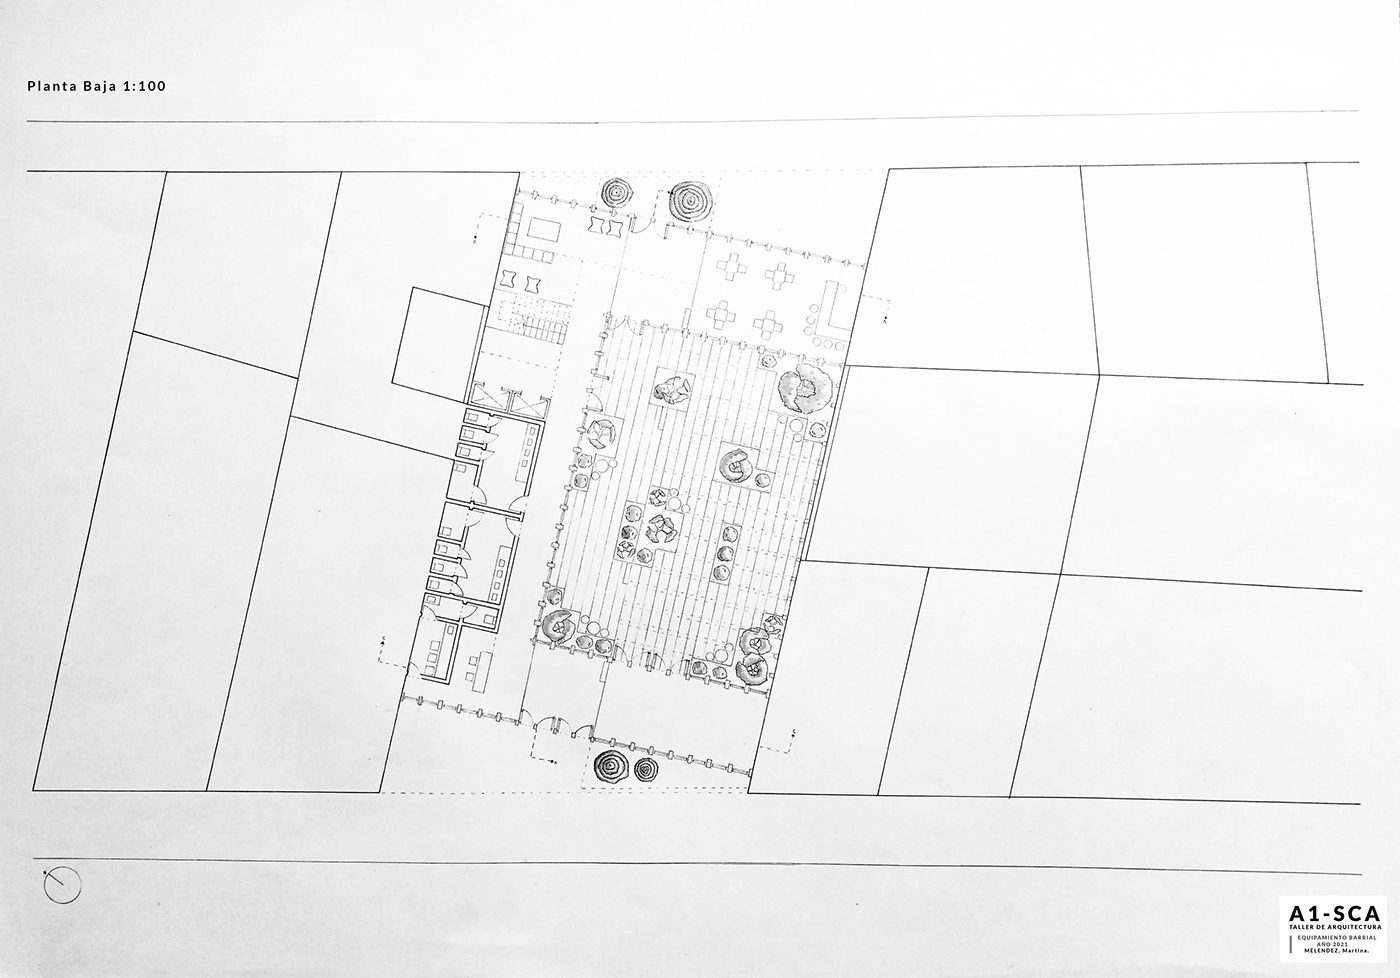 arquitectura dibujo fadu uba centro cultural proyecto student Project architecture Drawing 